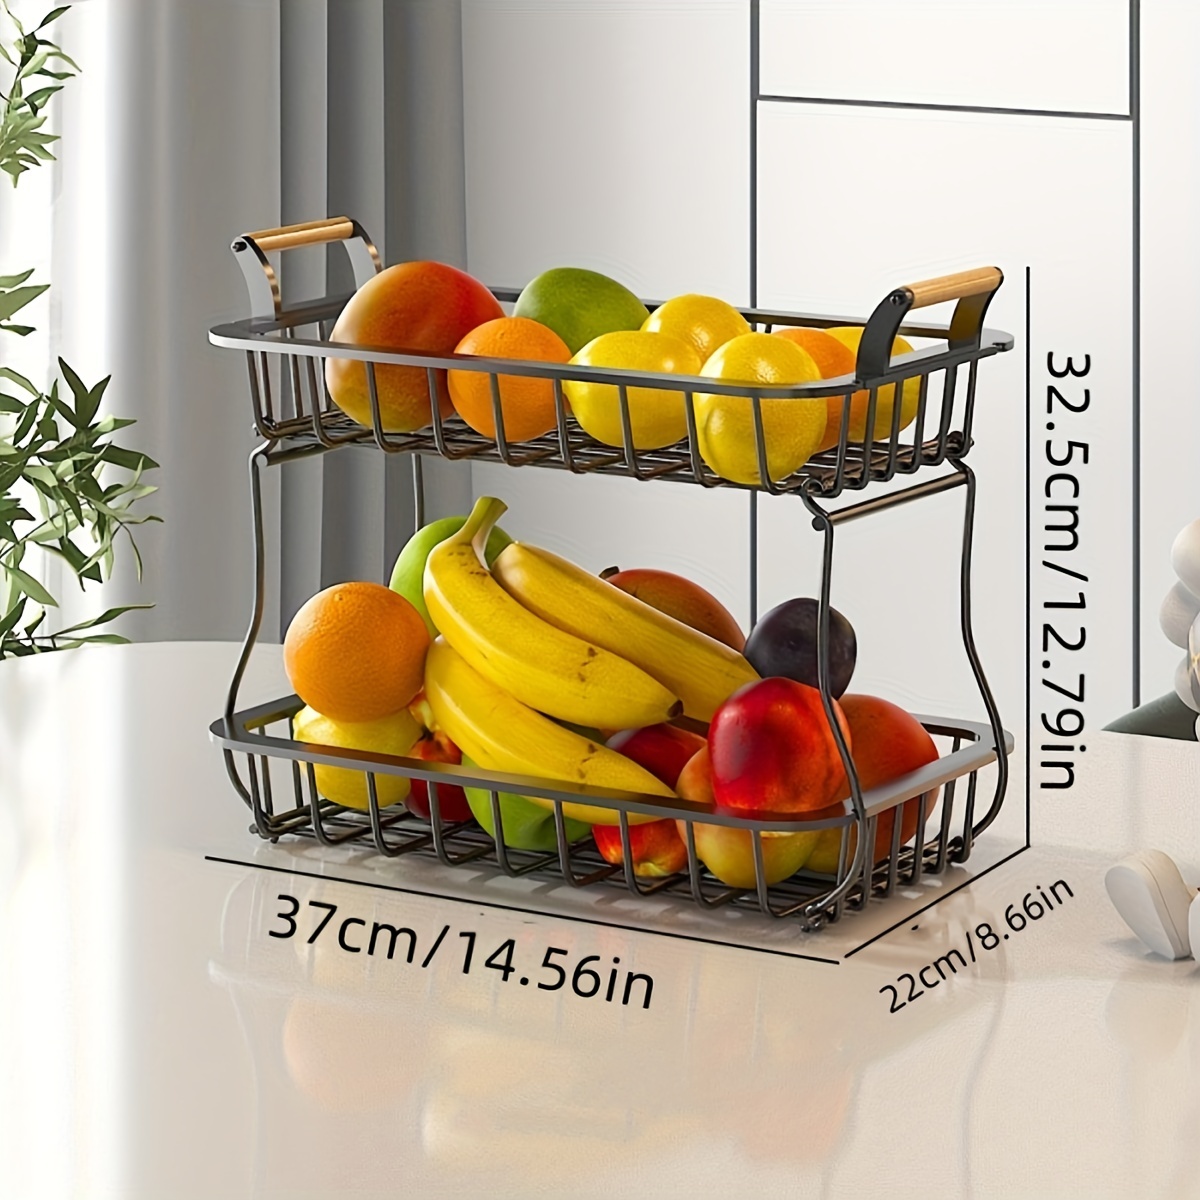 1pc 2 Tier Fruit Basket With 2 Banana Hangers, Countertop Fruit Vegetable  Basket Bowl For Counter, Metal Wire Storage Basket Fruits Stand Holder Organ